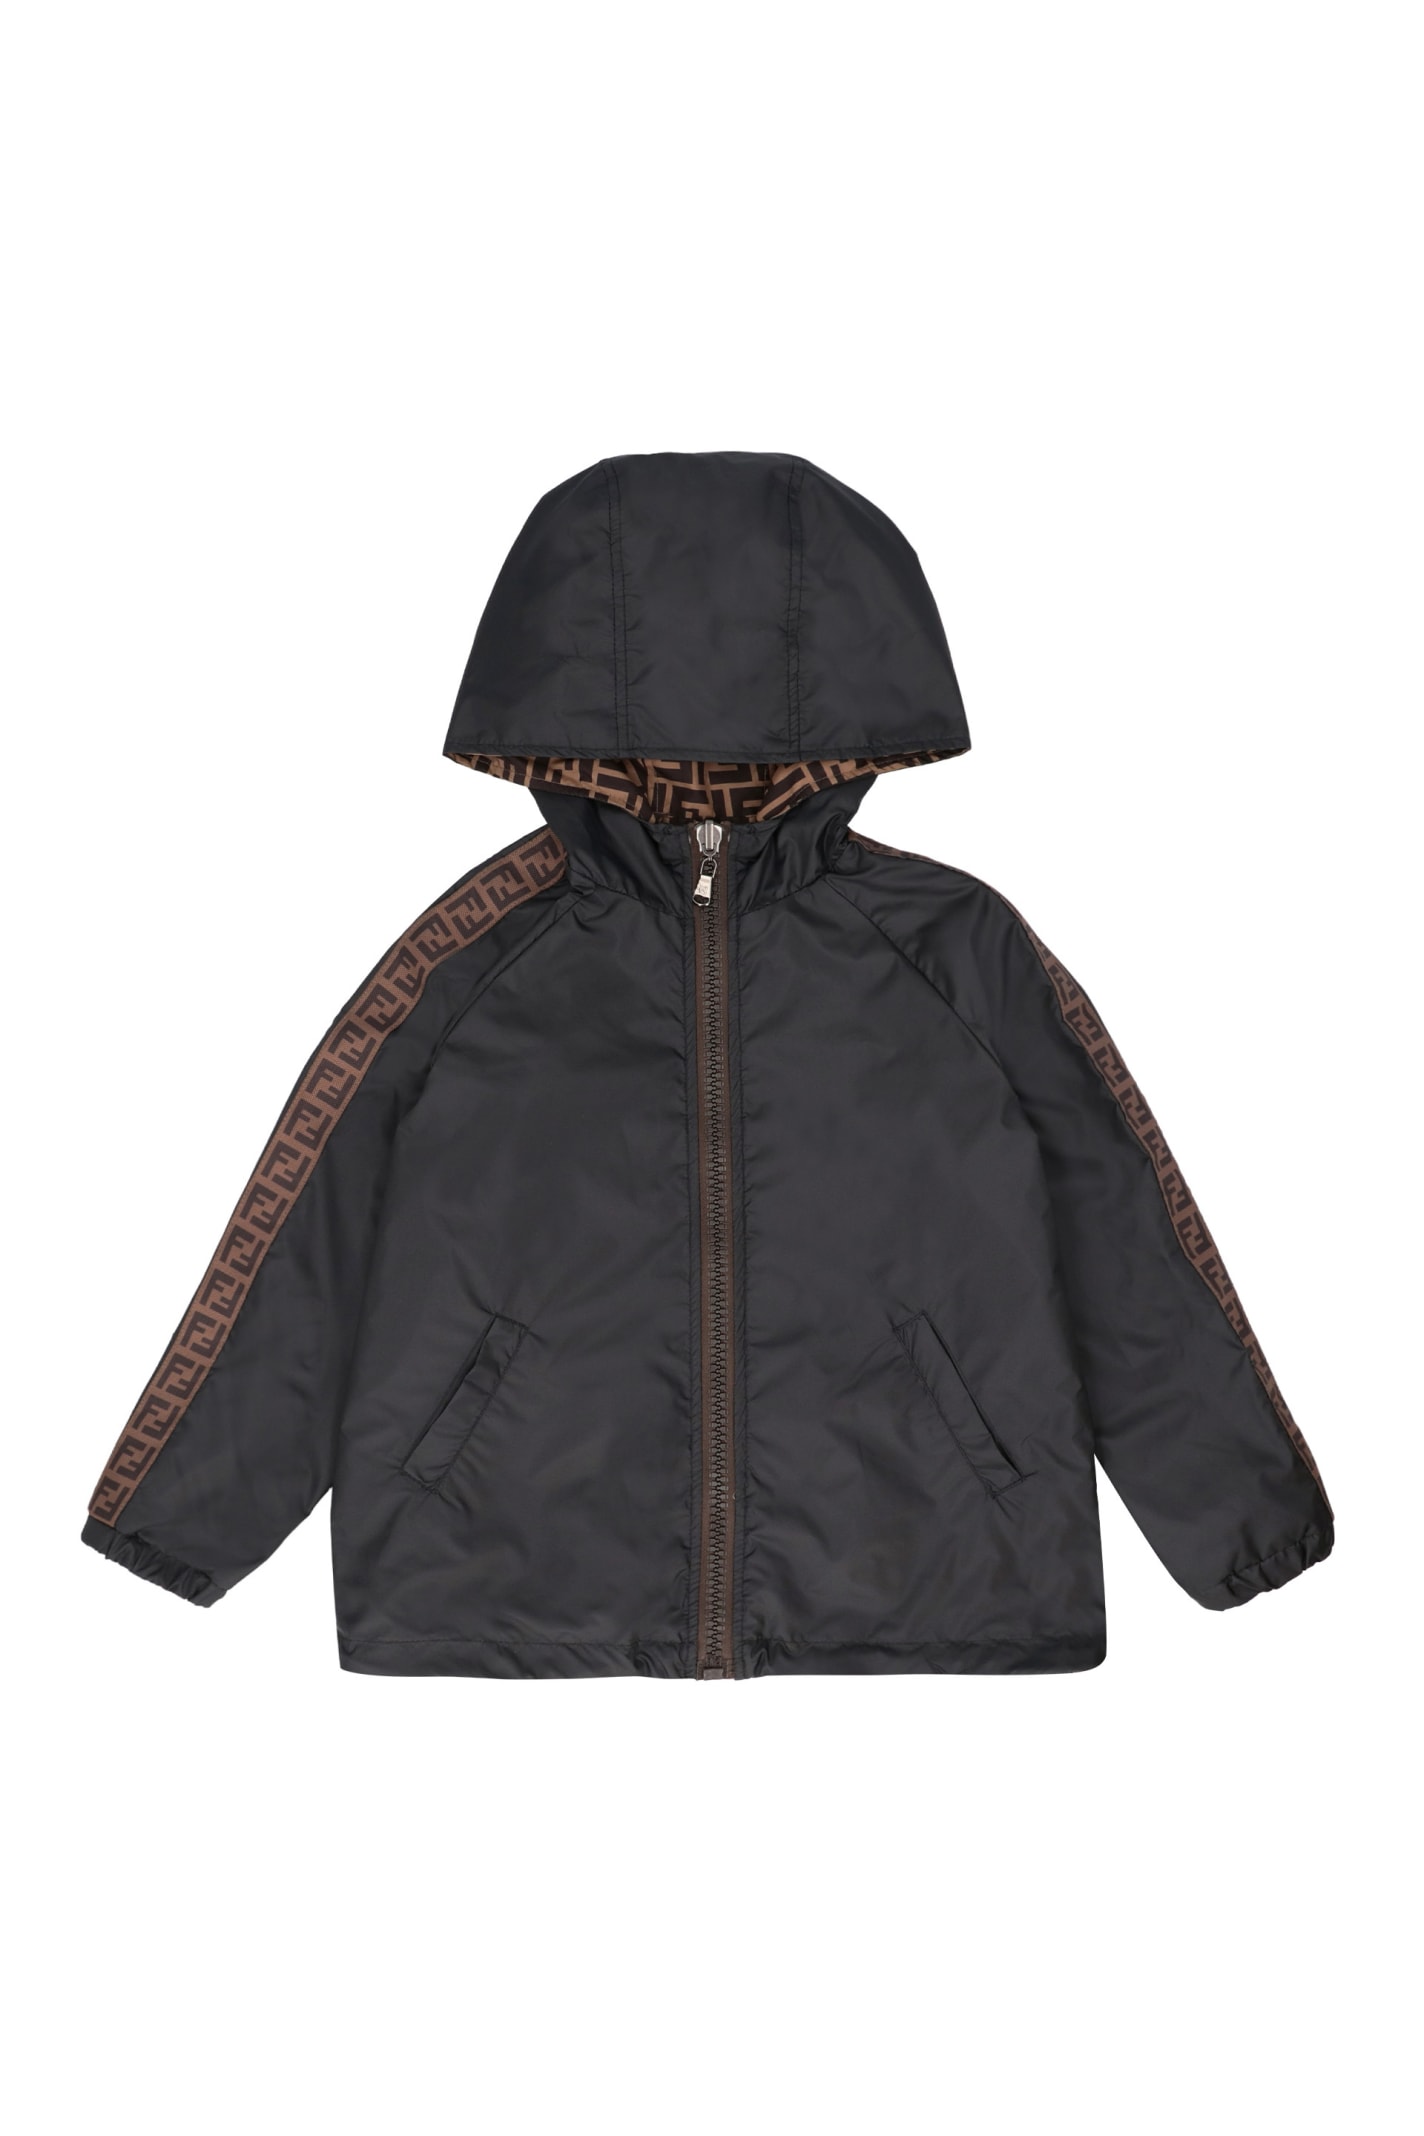 Fendi Kids' Technical Fabric Hooded Jacket In Black